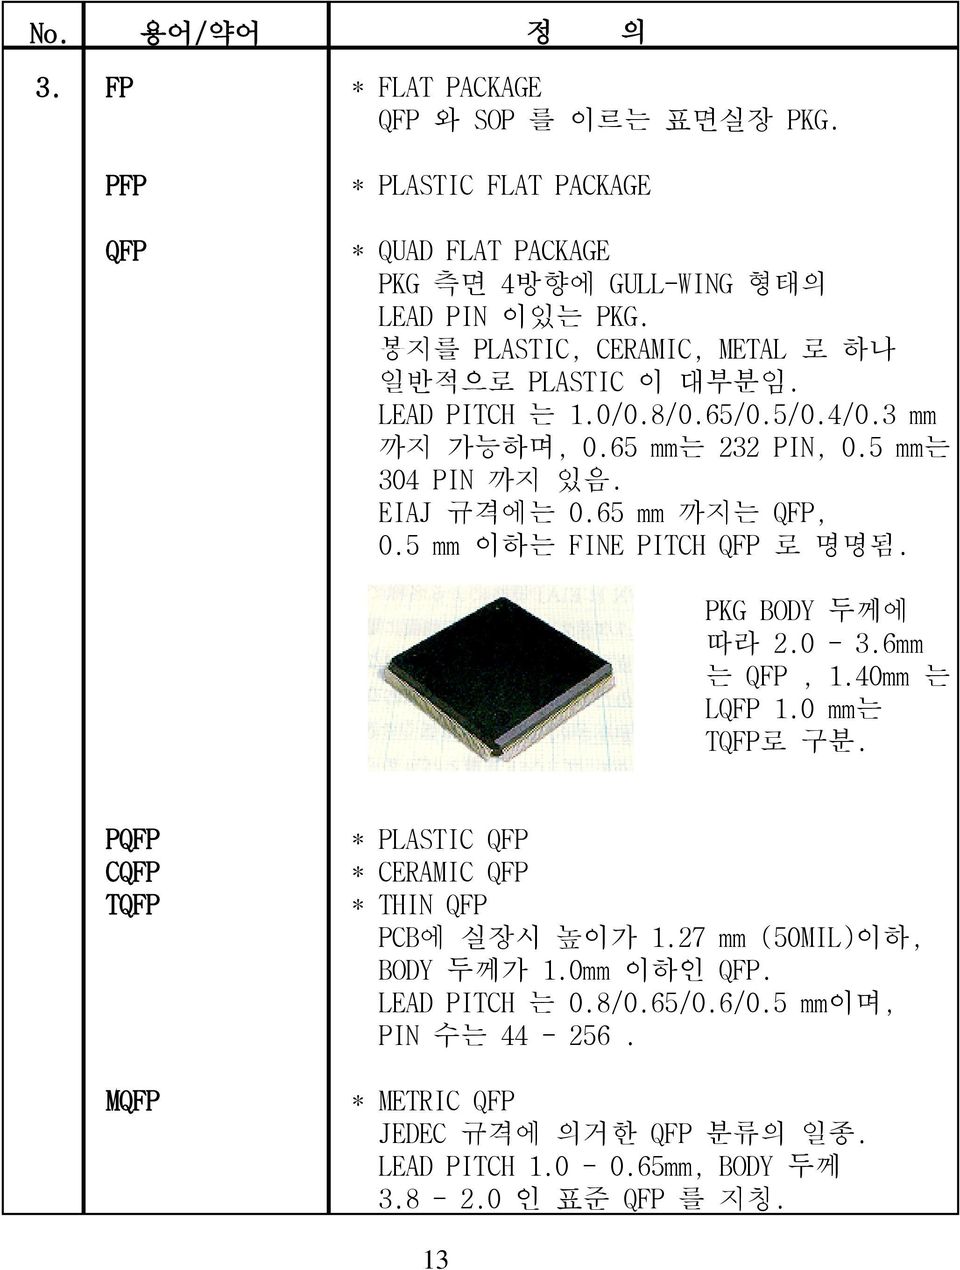 65 mm 까지는 QFP, 0.5 mm 이하는 FINE PITCH QFP 로 명명됨. PKG BODY 두께에 따라 2.0-3.6mm 는 QFP, 1.40mm 는 LQFP 1.0 mm는 TQFP로 구분.